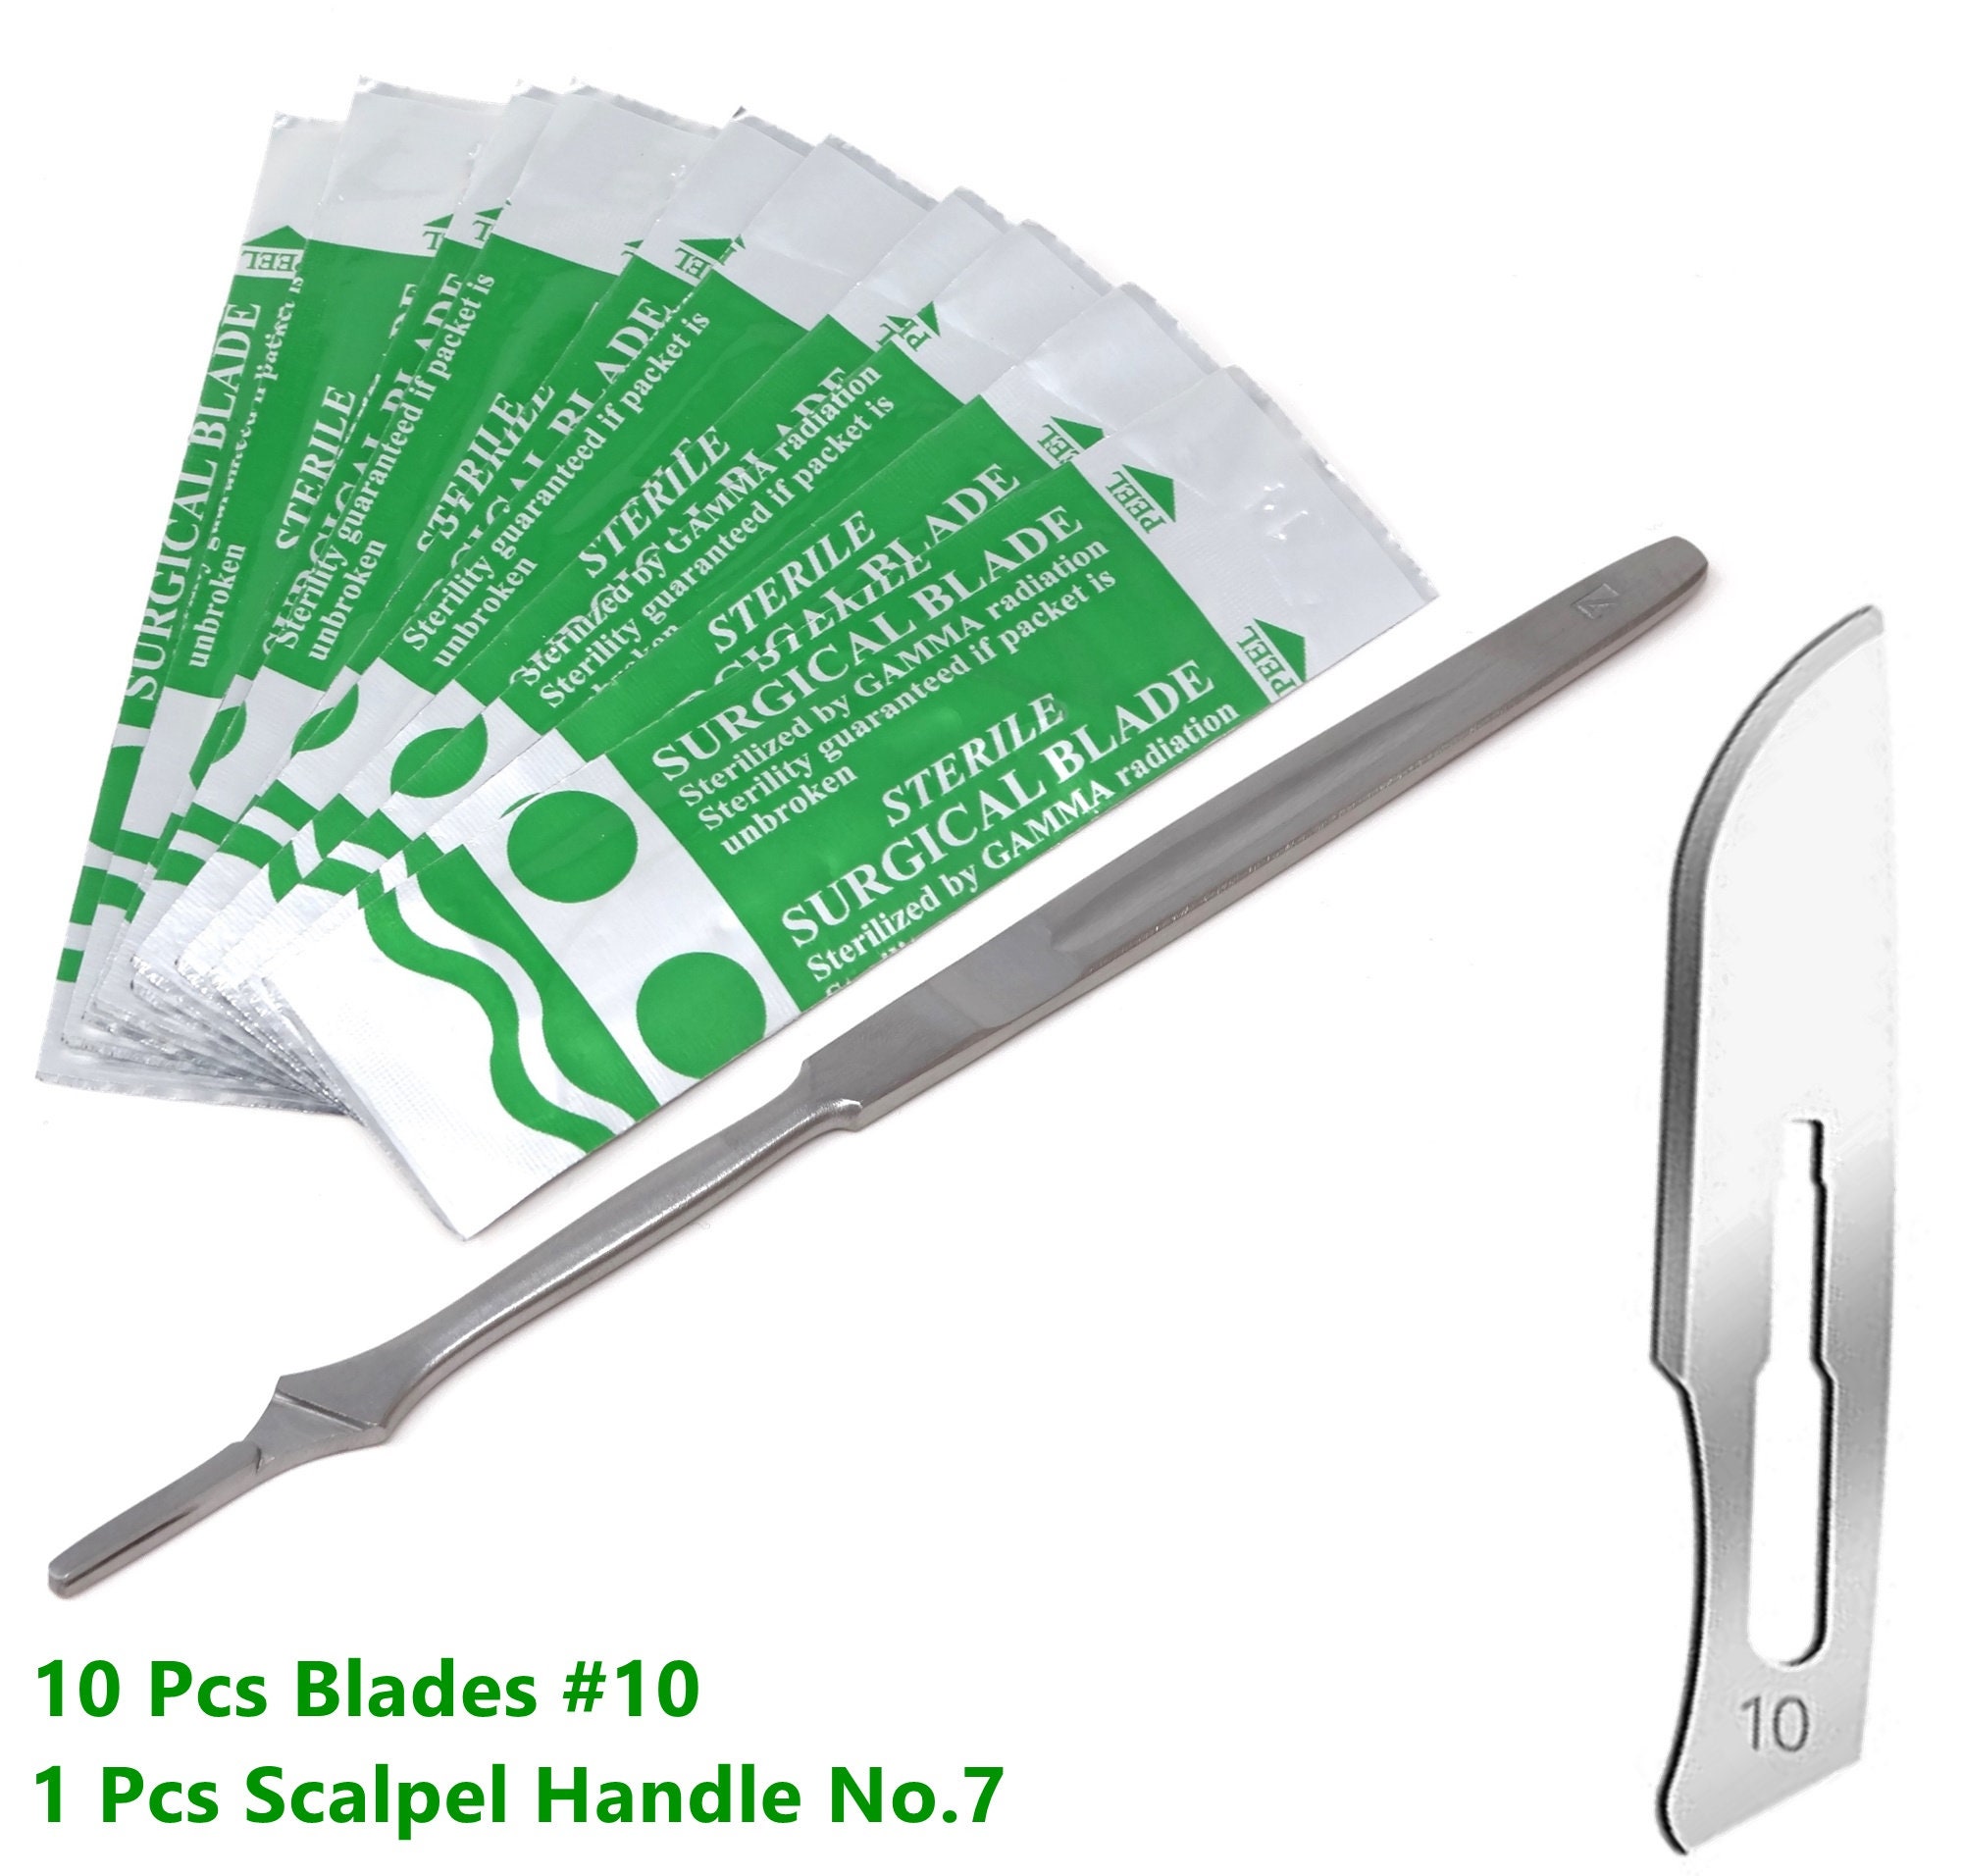  Scalpel Sterile Blades #10 10pcs Sterile Individually